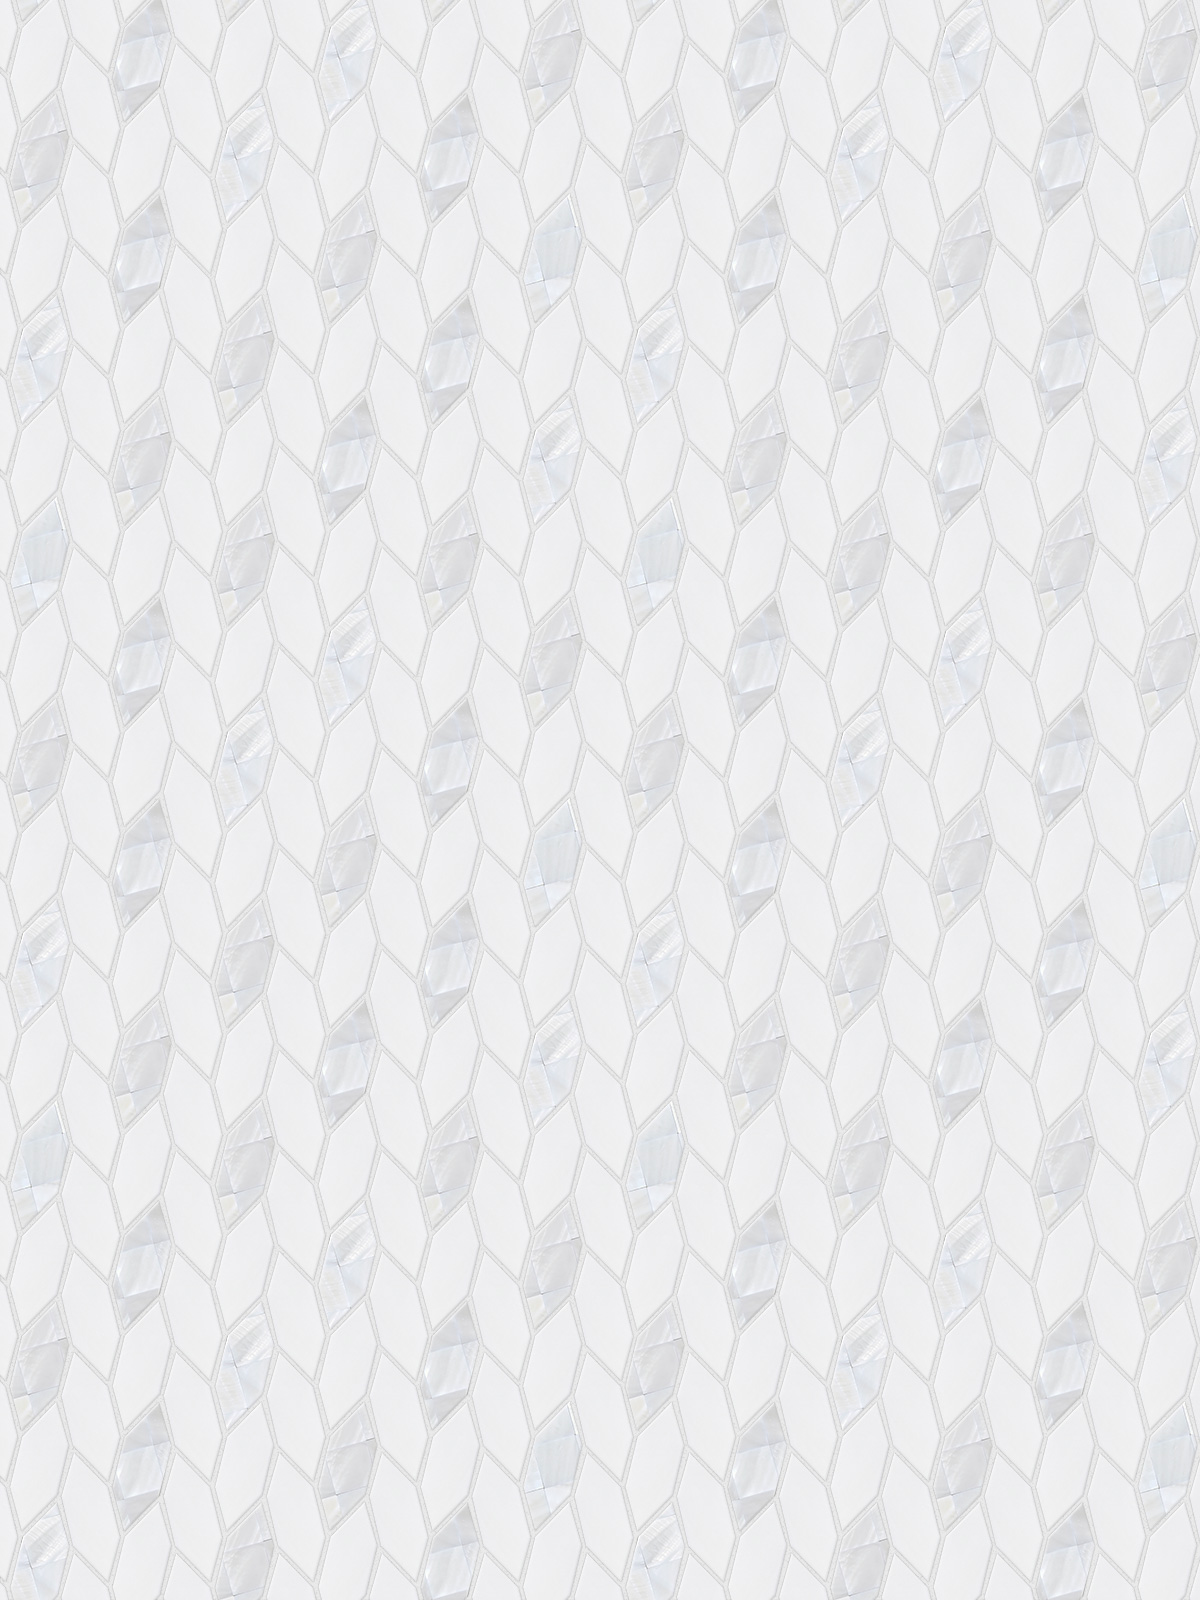 Luxury White Mother of Pearl Marble Backsplash Tile BA7005 2